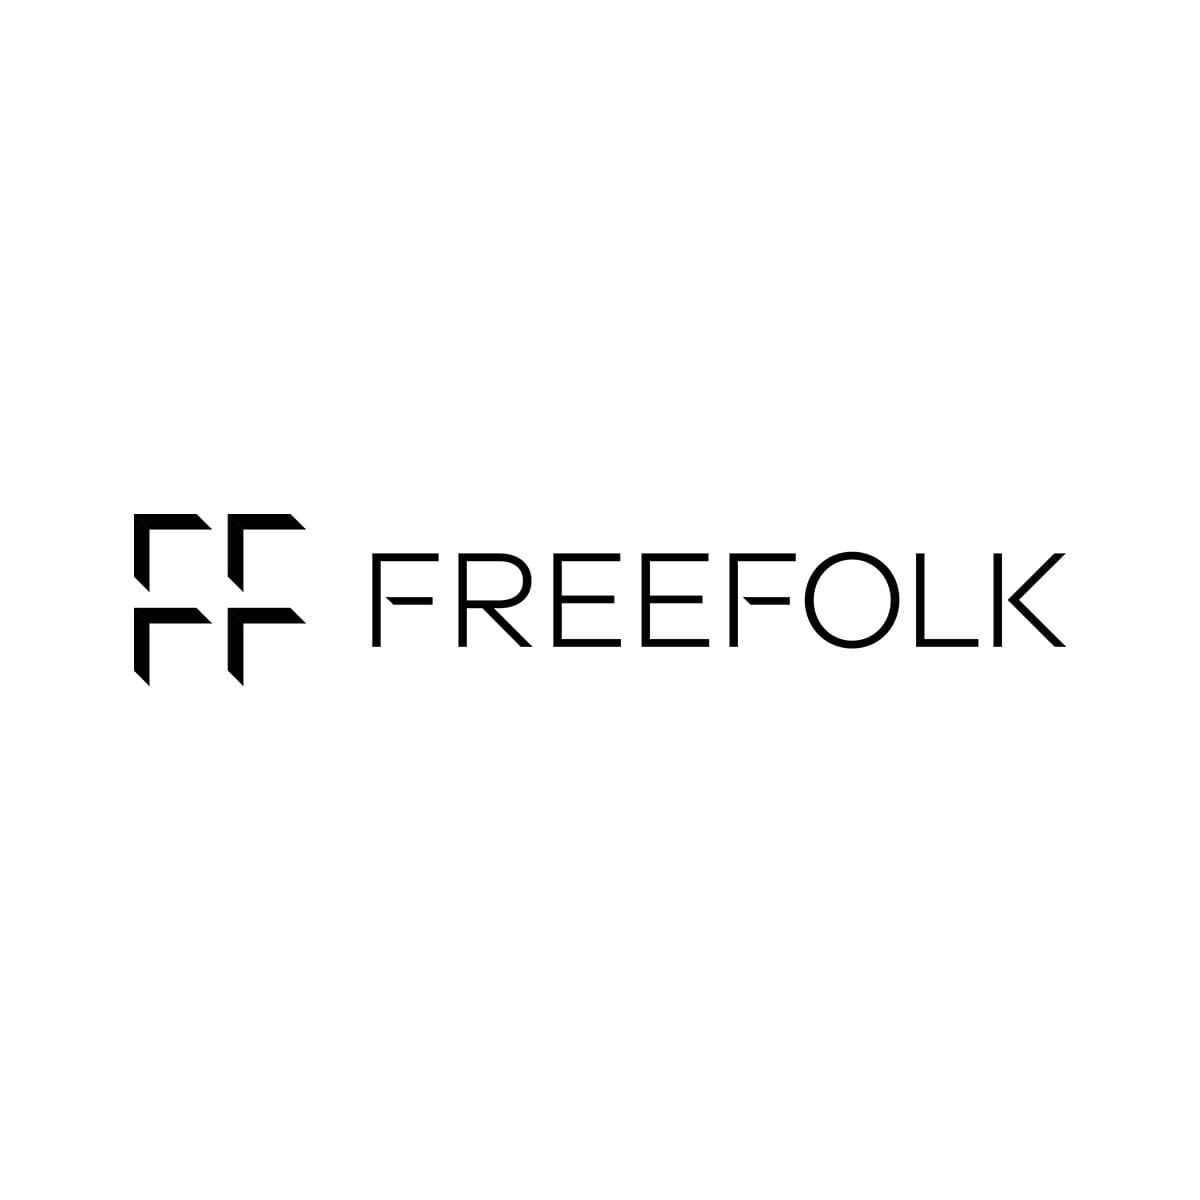 Freefolk logo